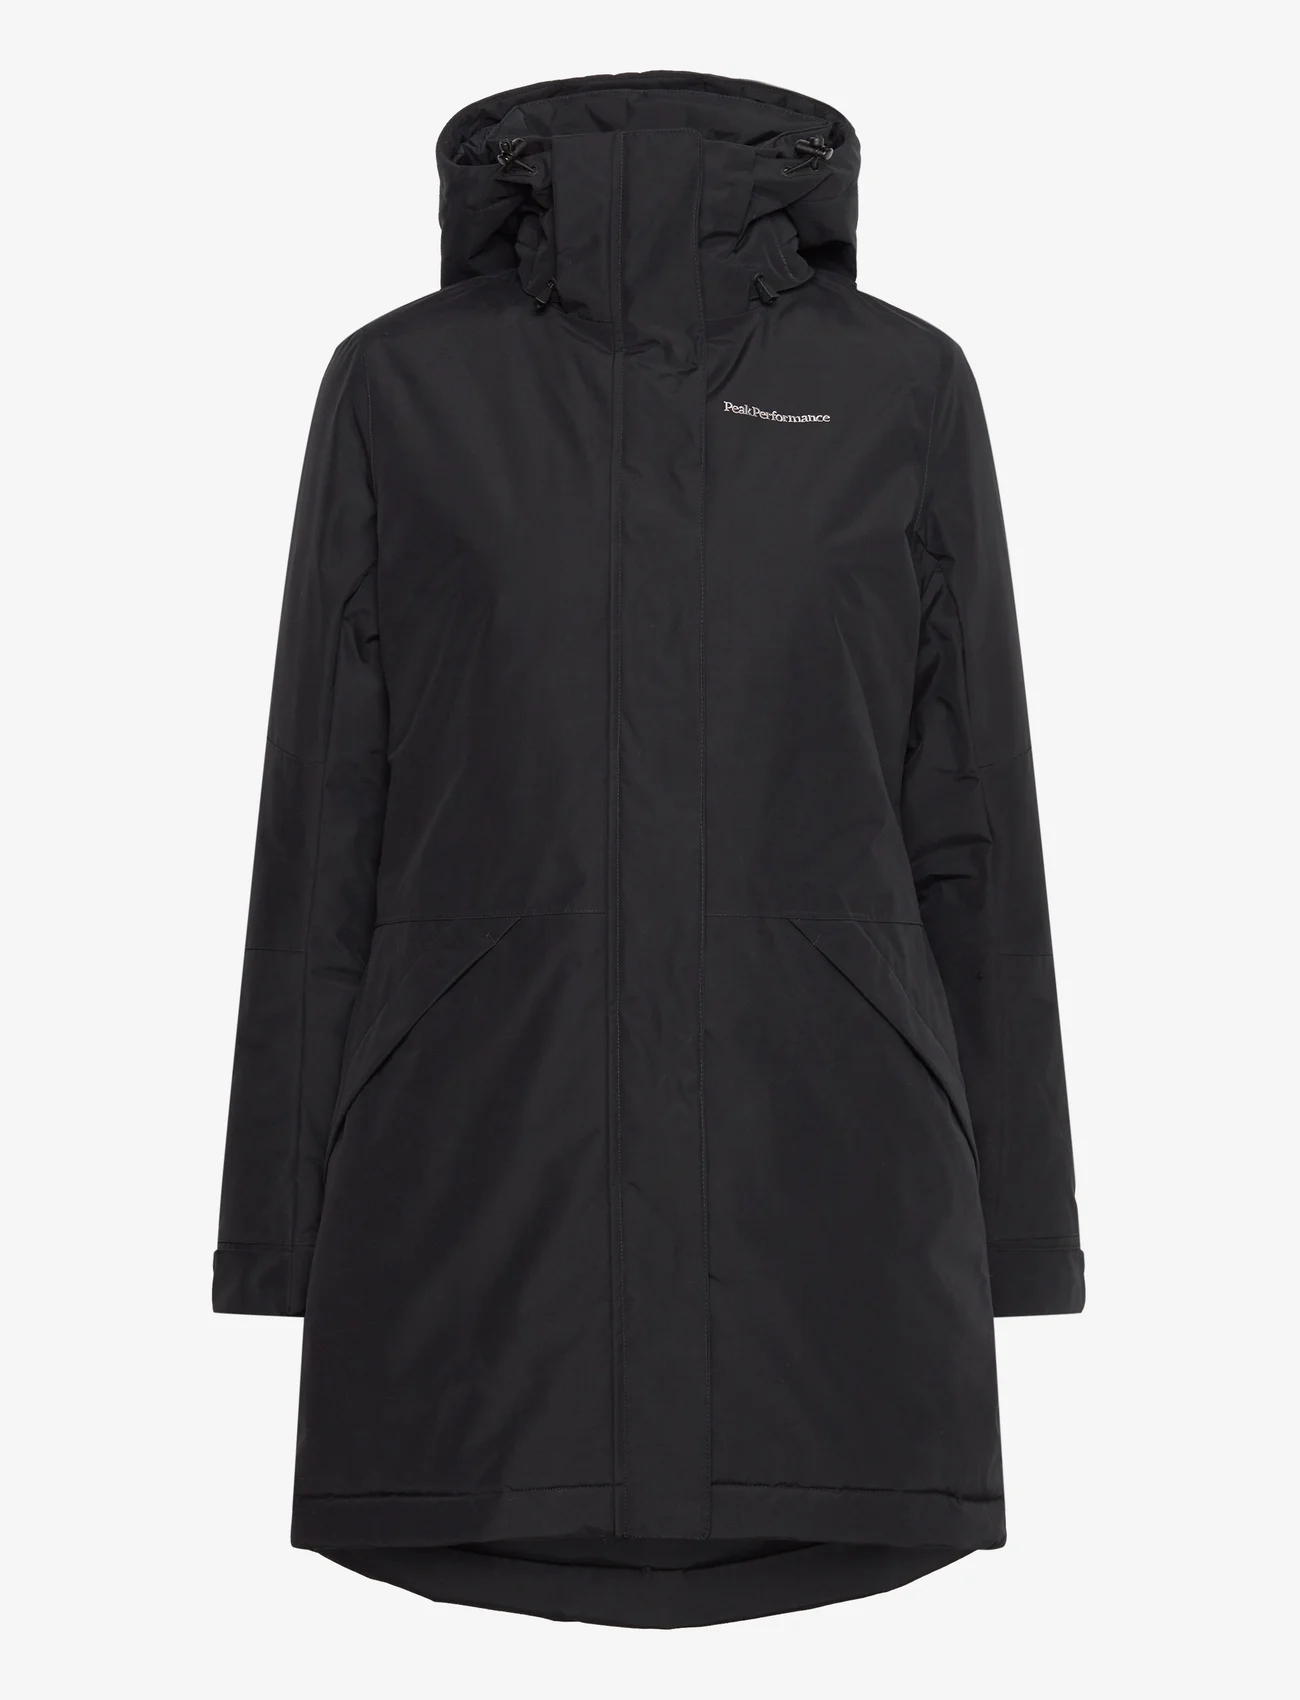 Peak Performance W Siz Jacket-black - 300 €. Buy Parka Coats from Peak ...